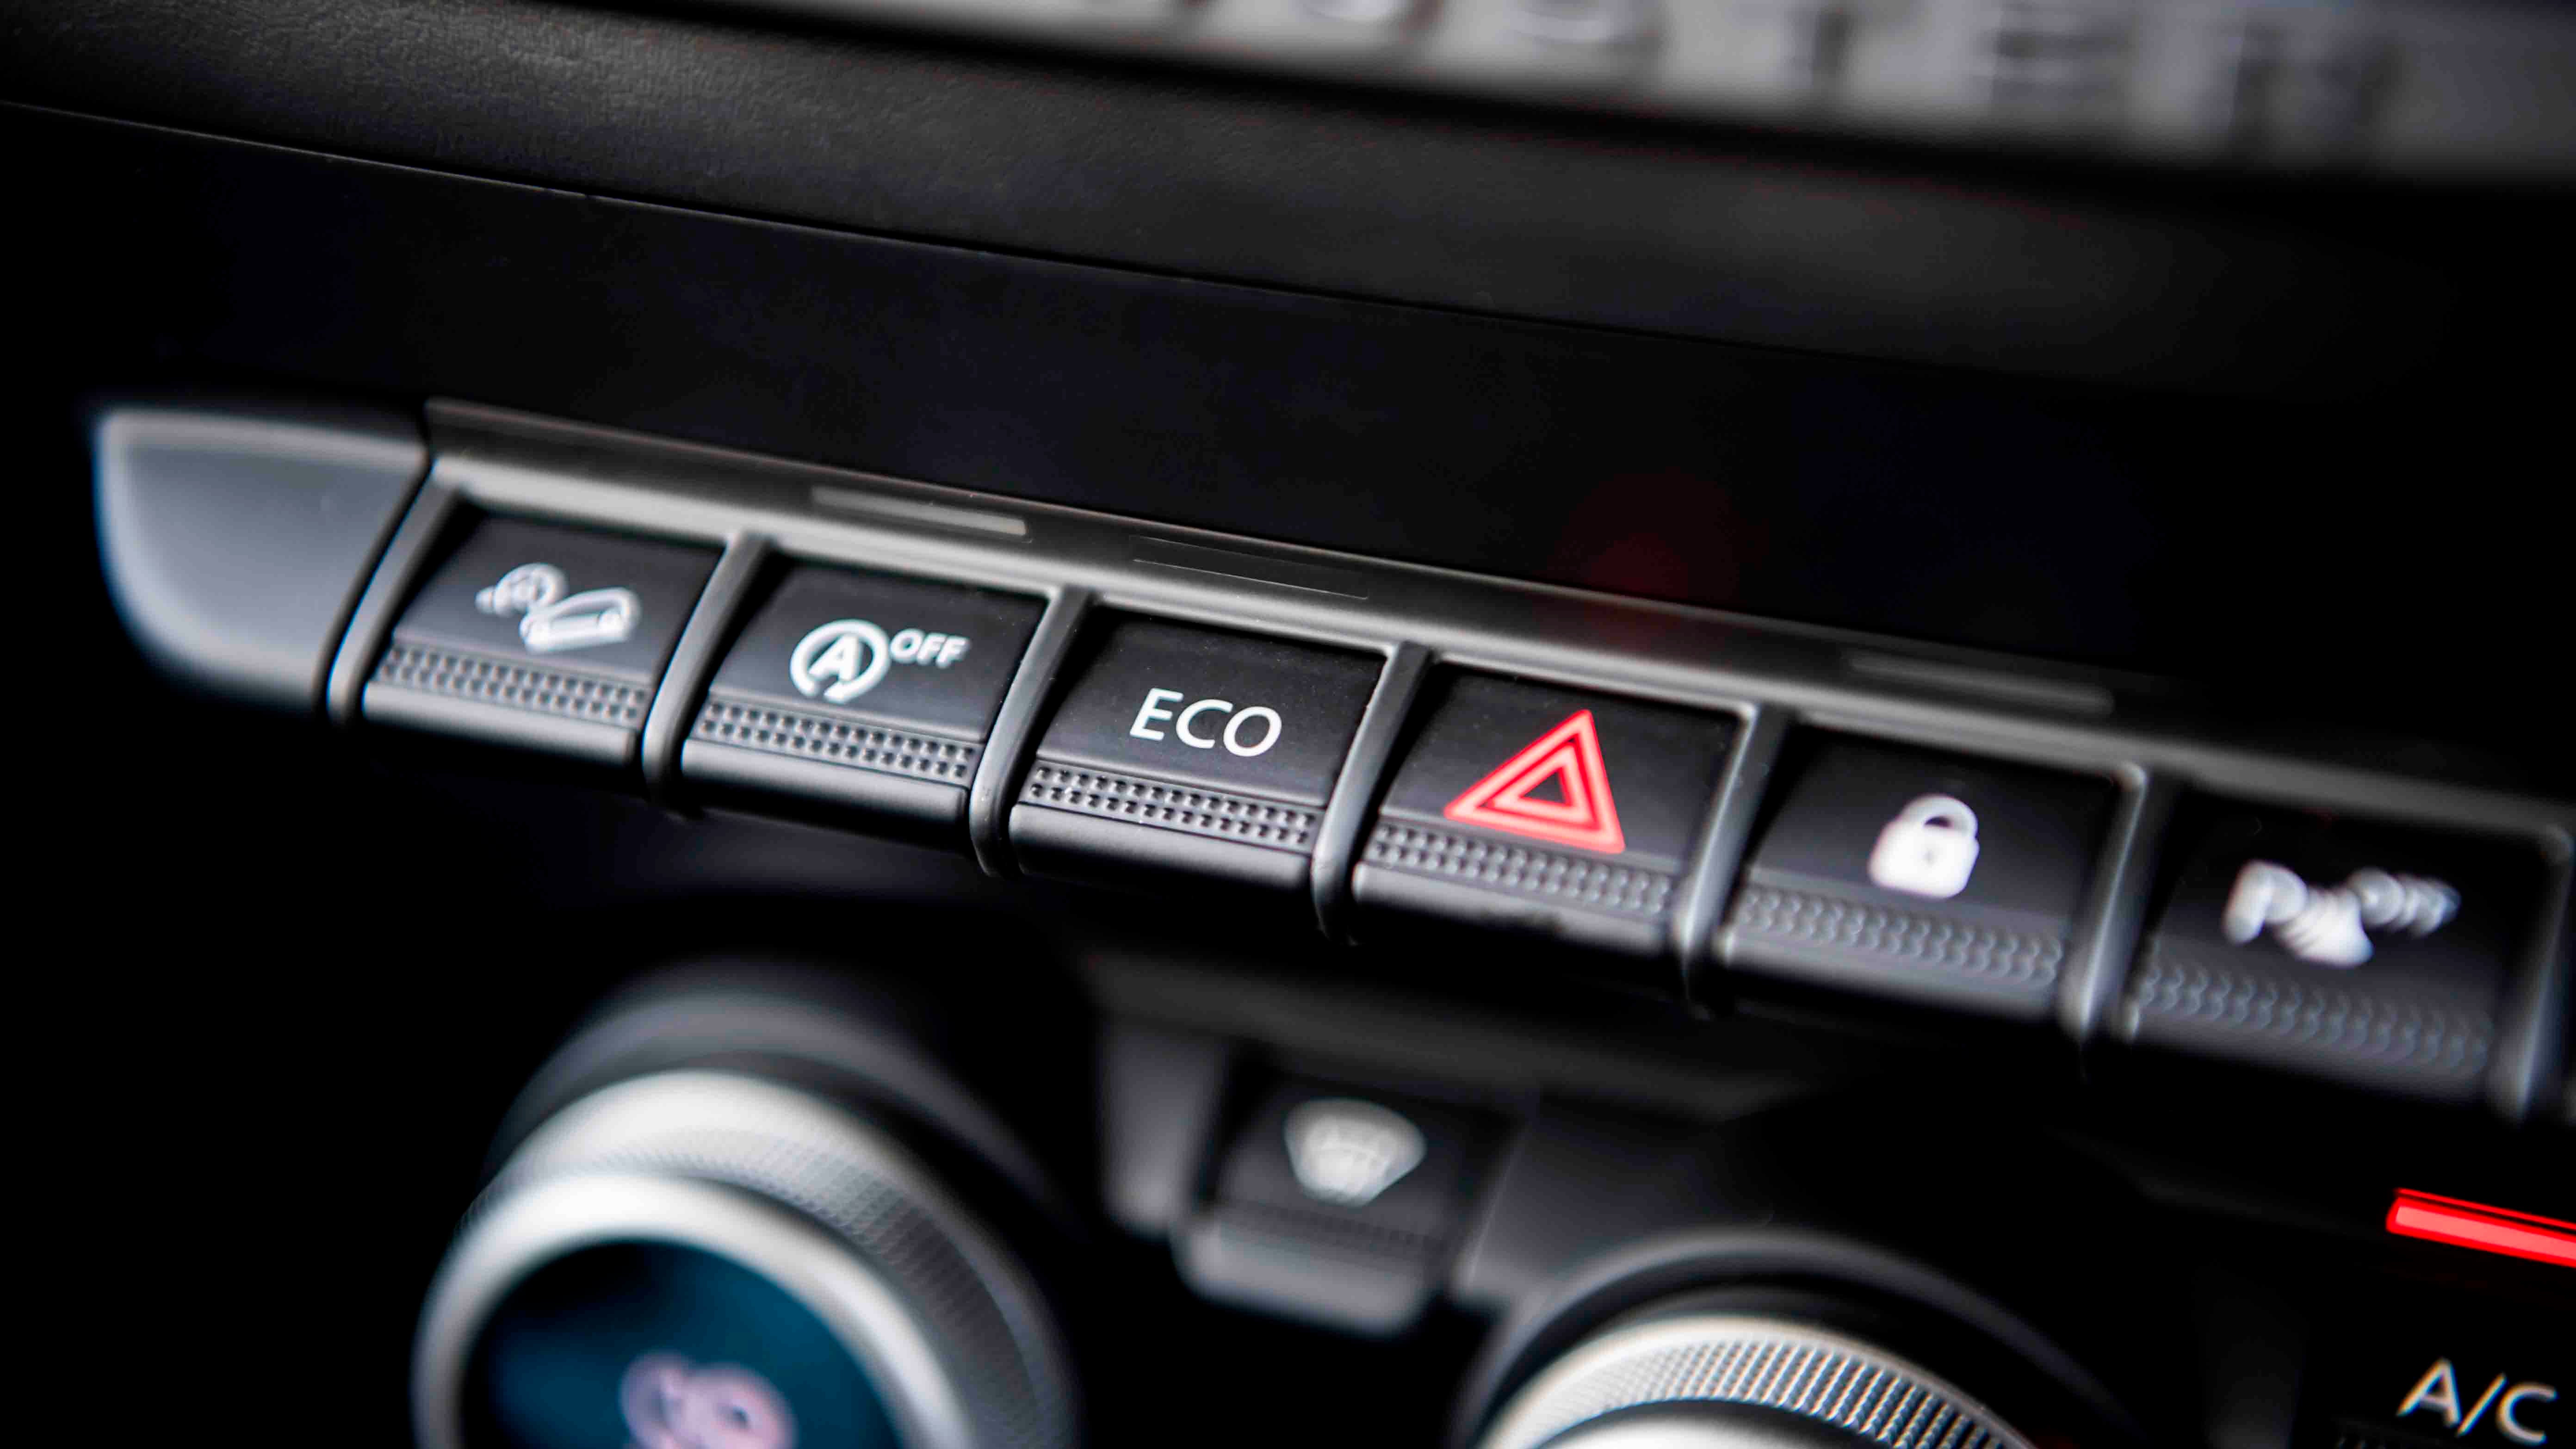 Dacia Duster dashboard buttons